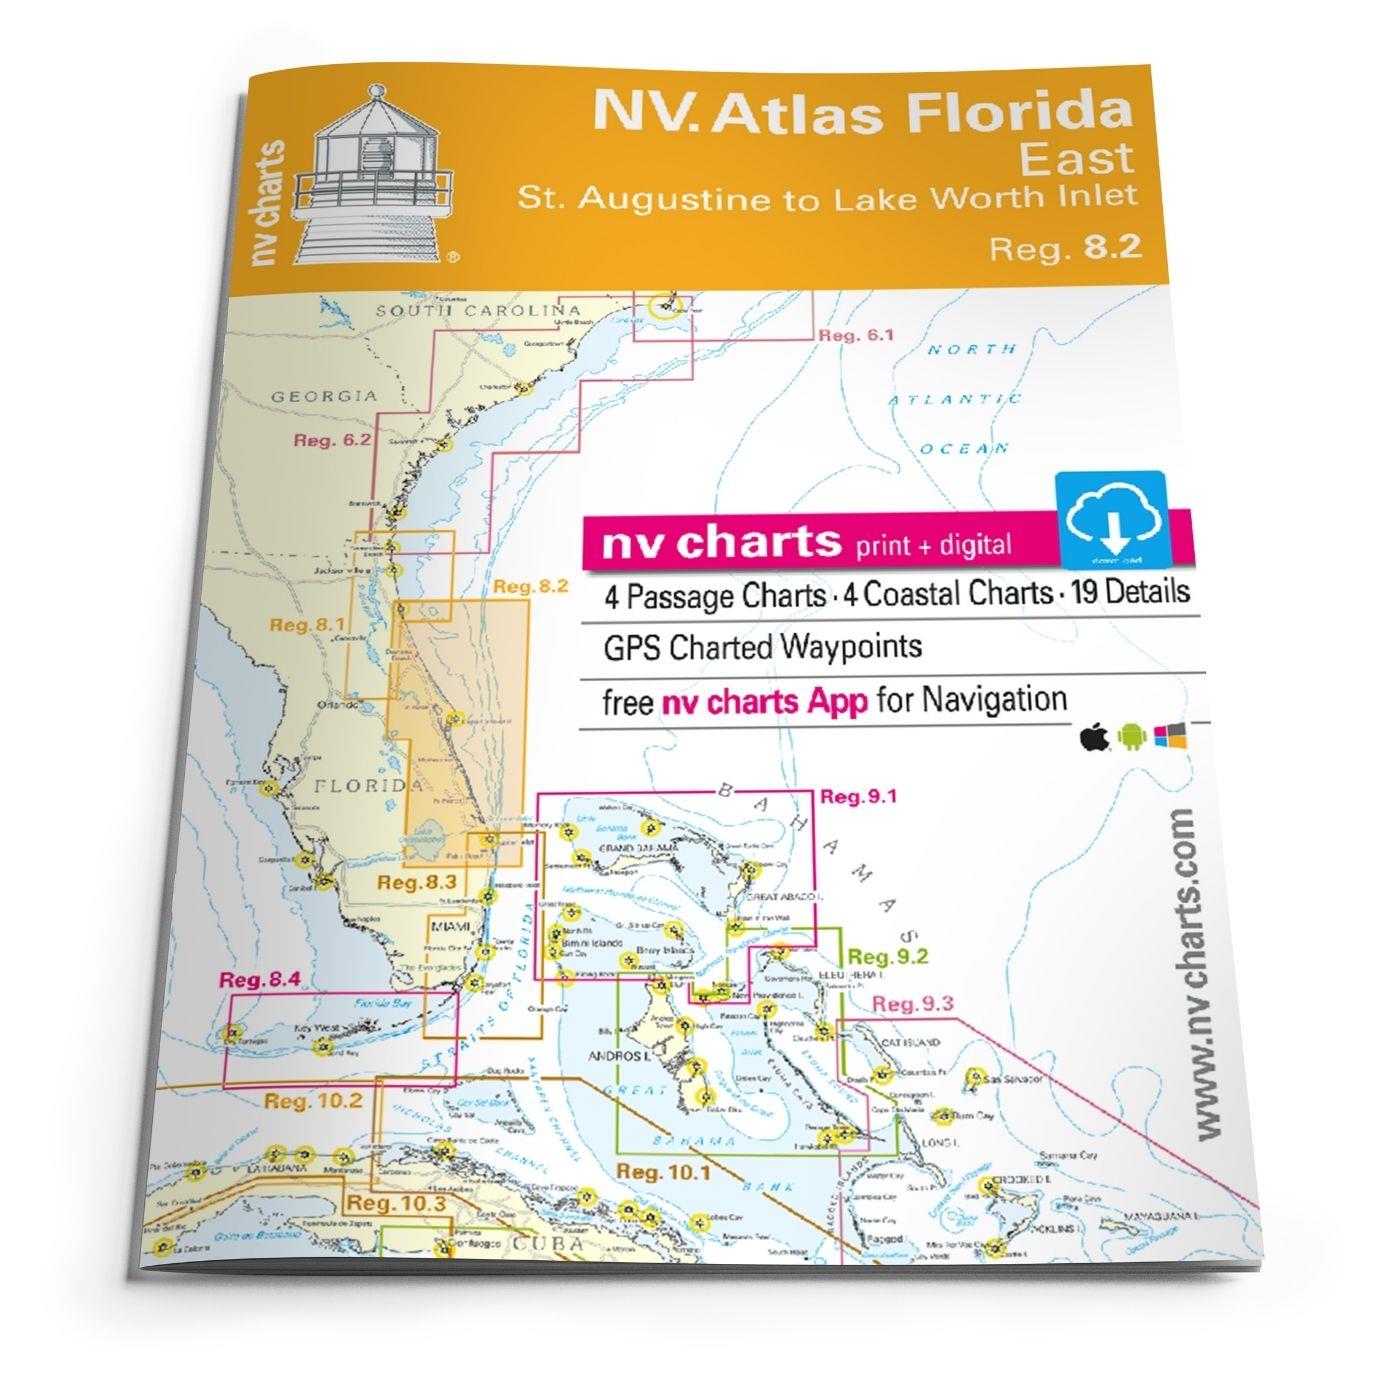 NV Atlas Florida East Reg. 8.2 - St. Augustine to Lake Worth Inlet